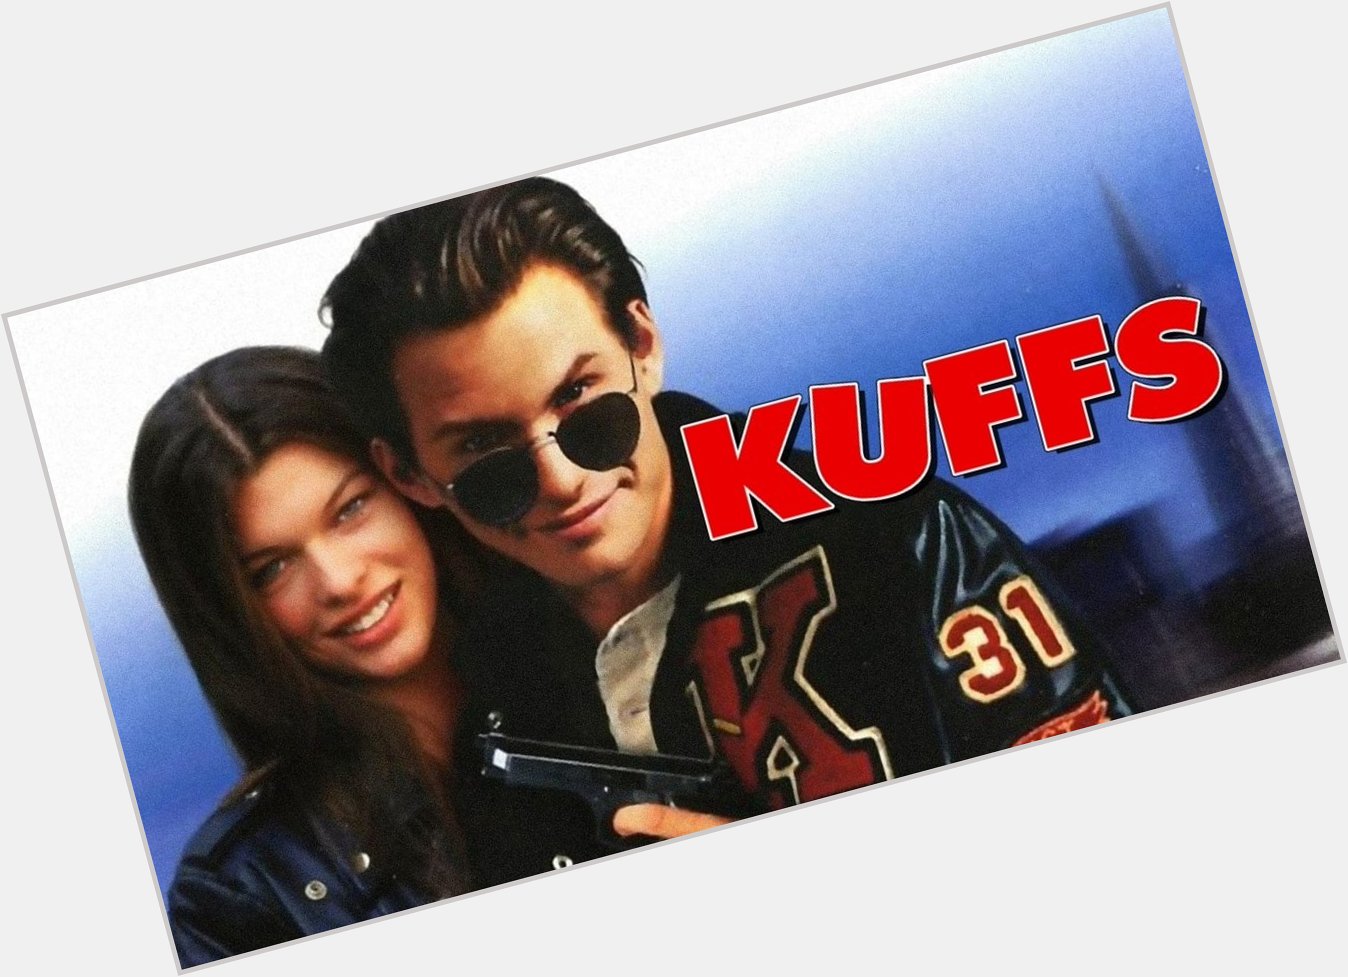 Kuffs  (1992)
Happy Birthday, Milla Jovovich! 